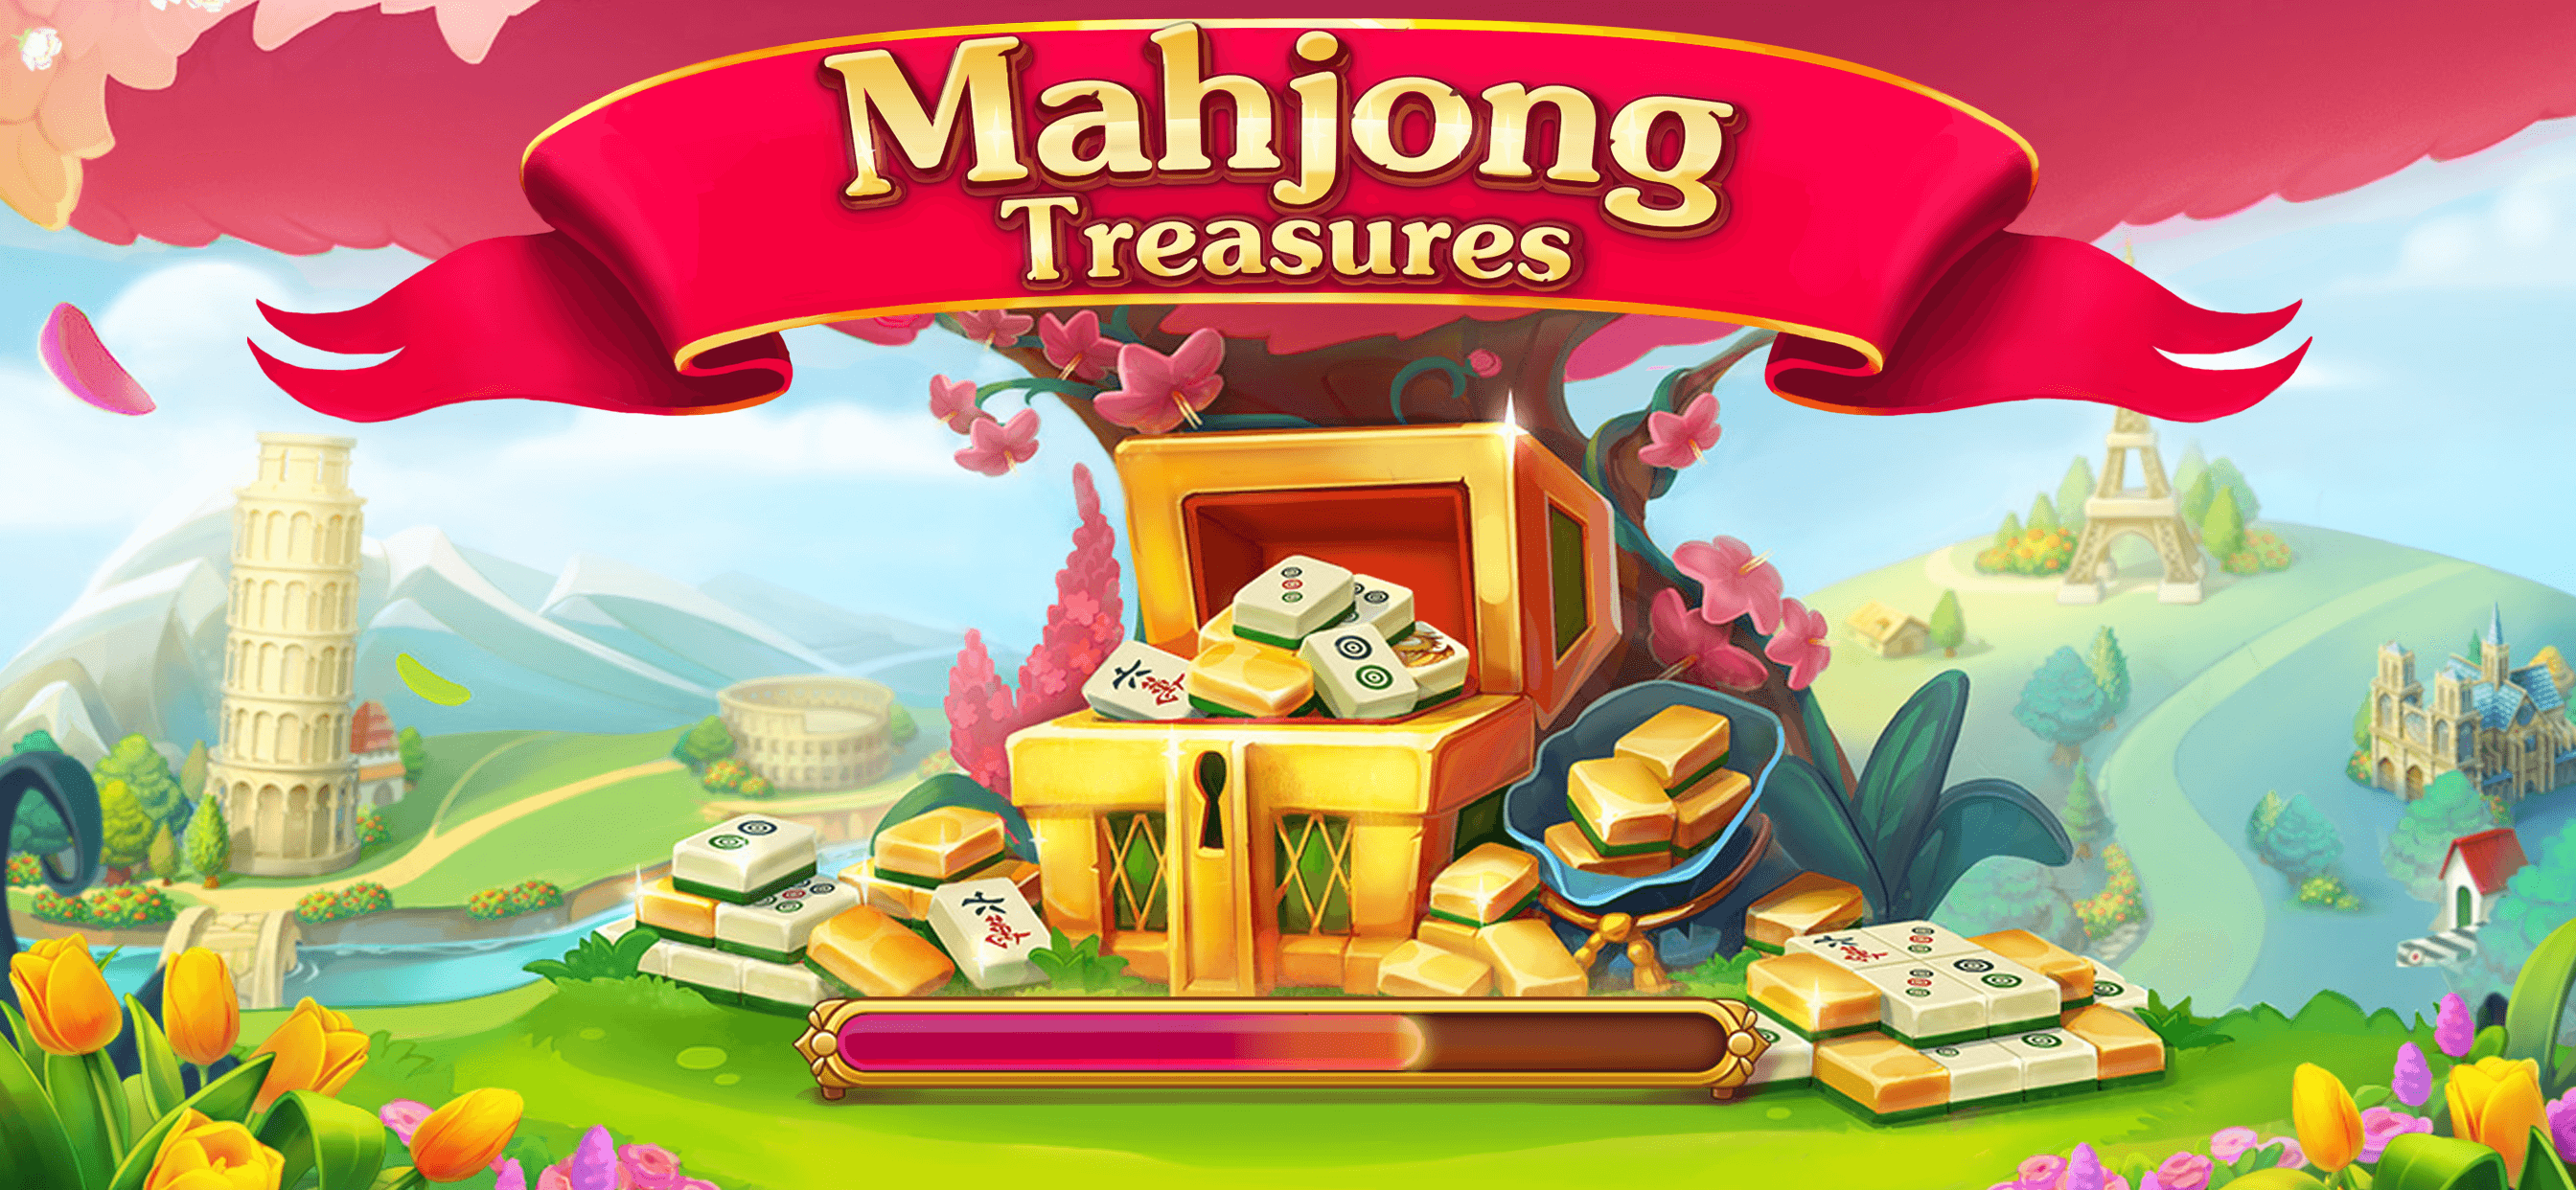 download the new version for iphoneMahjong Treasures